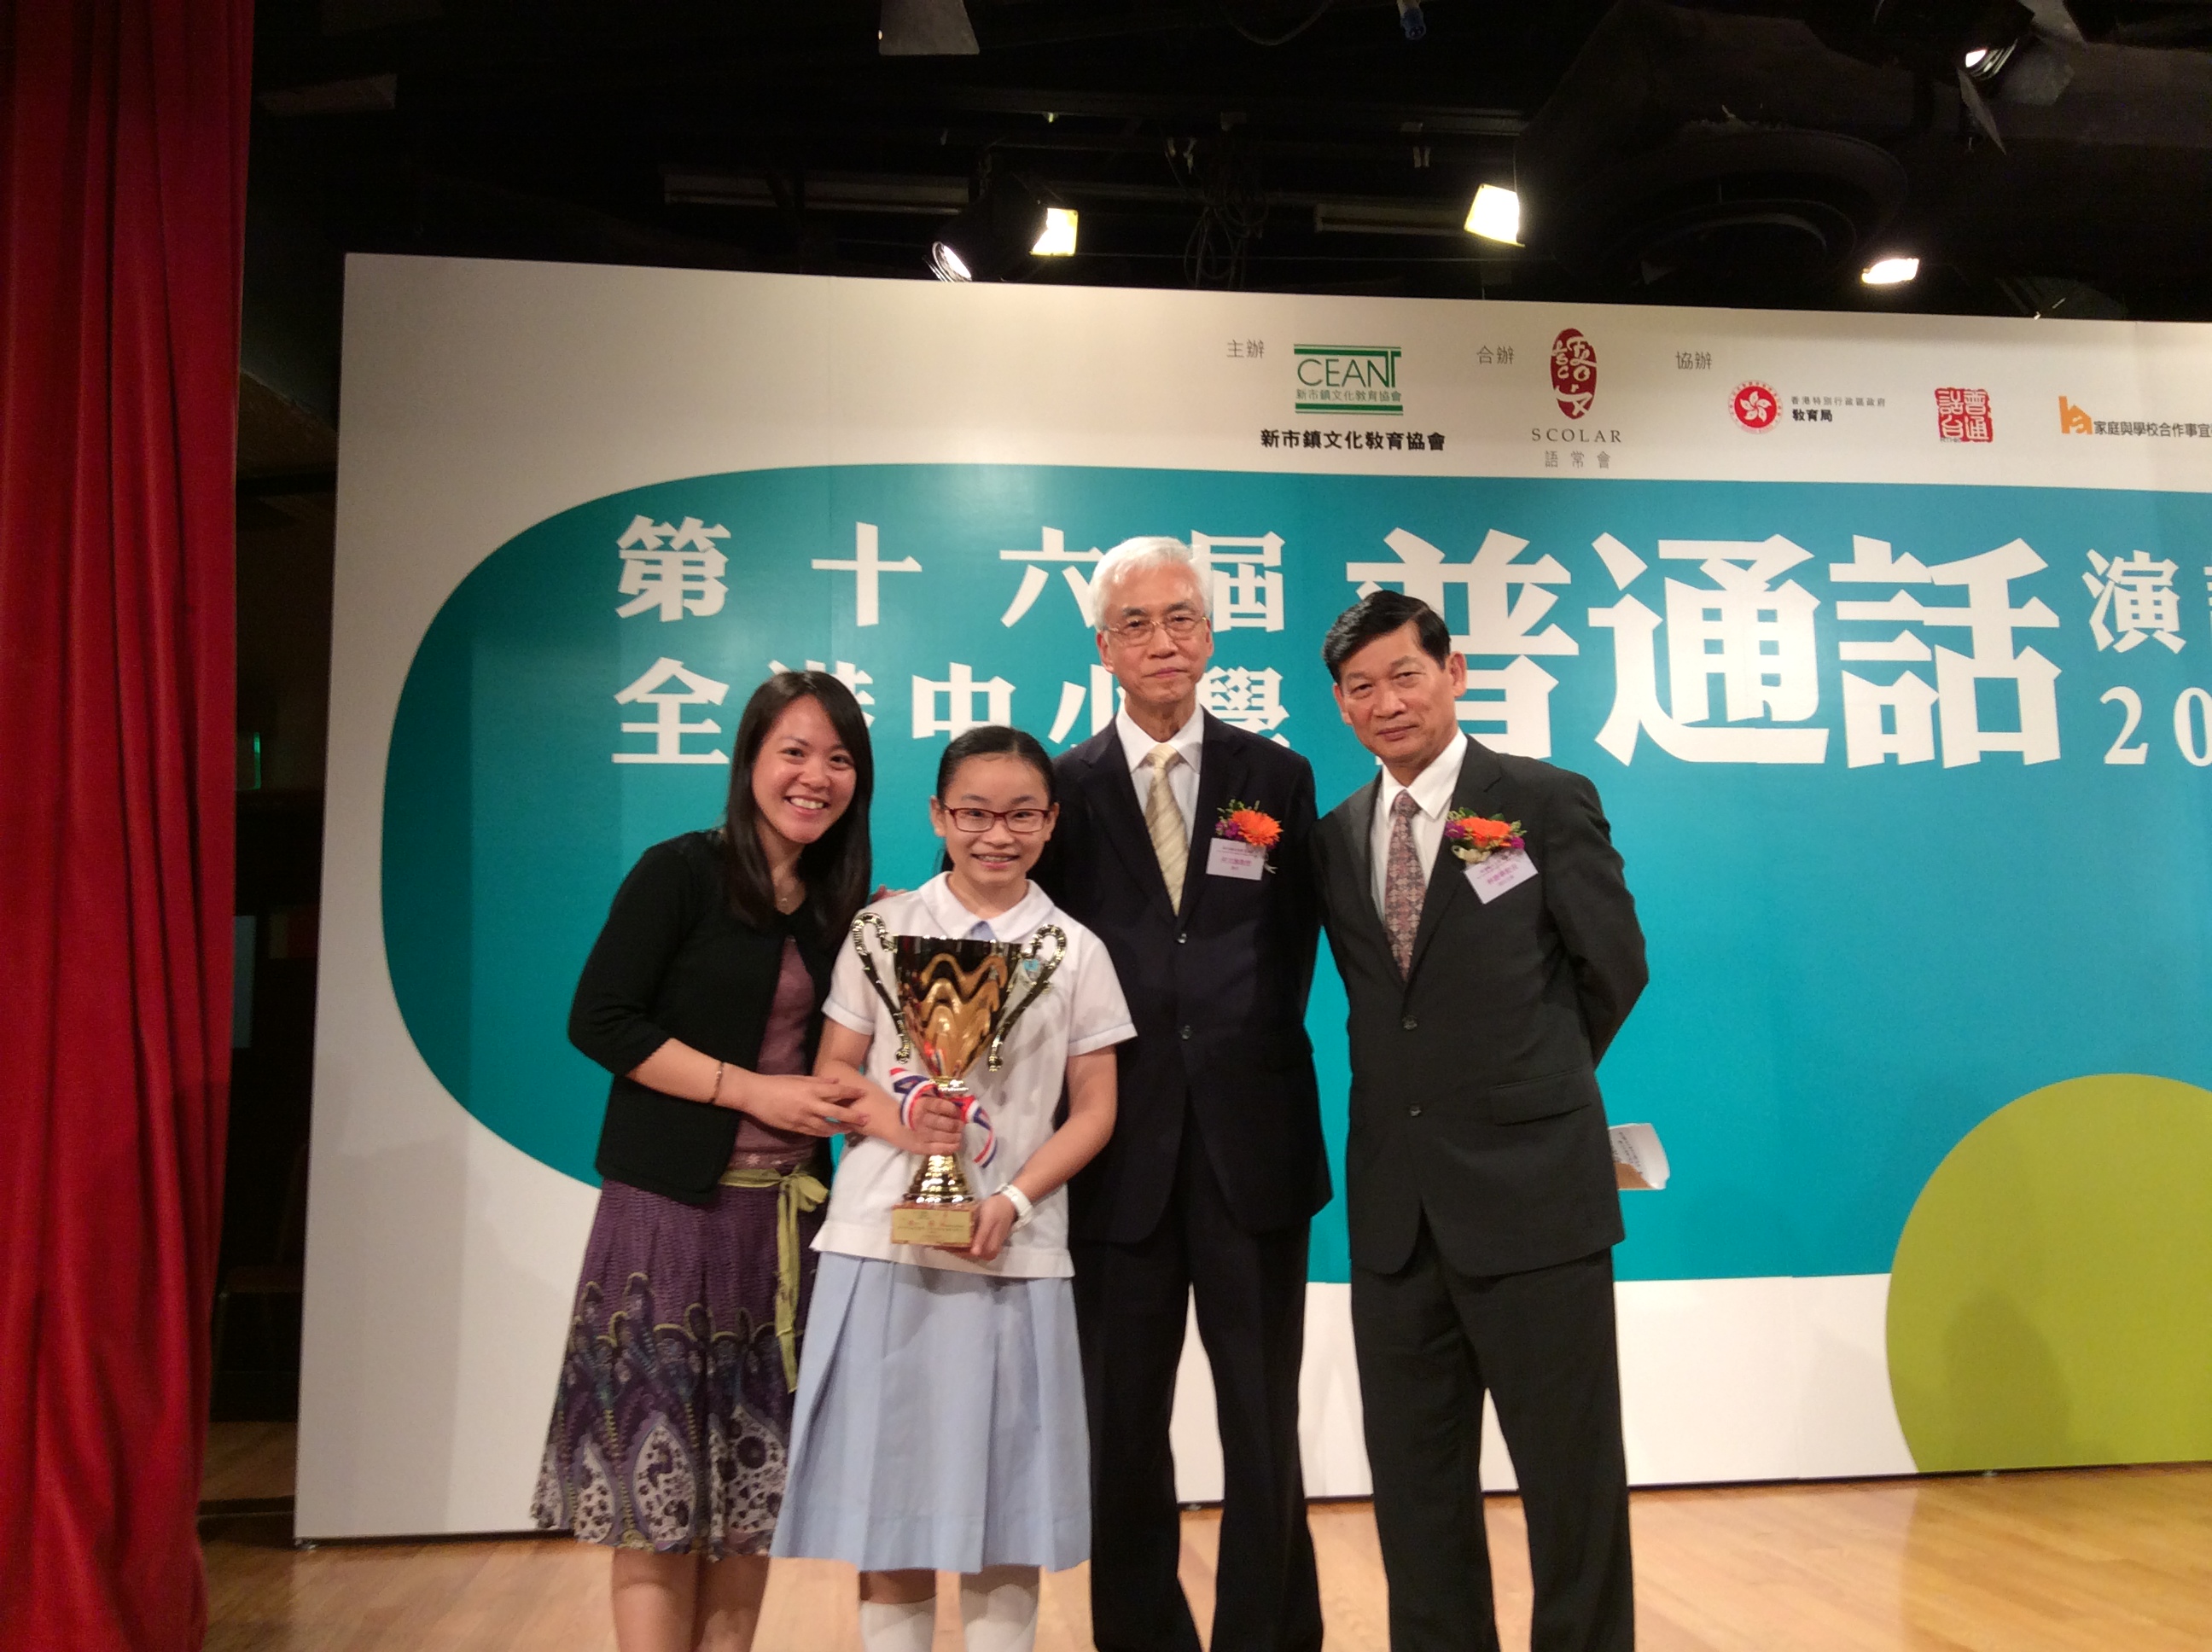 The Hong Kong Champion in Putonghua Public Speaking